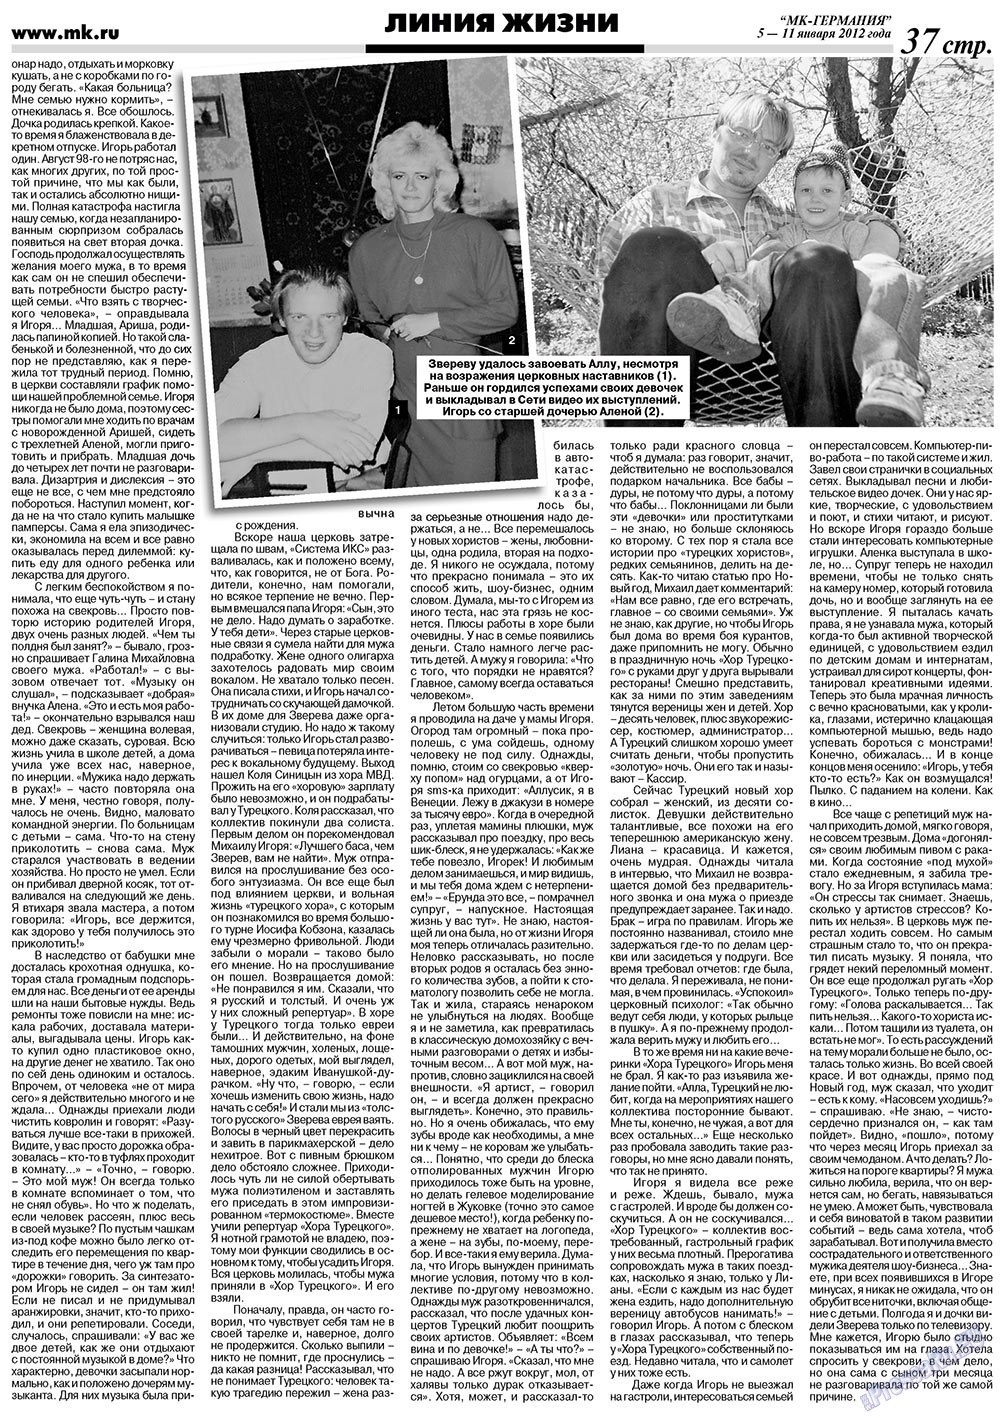 МК-Германия, газета. 2012 №1 стр.23